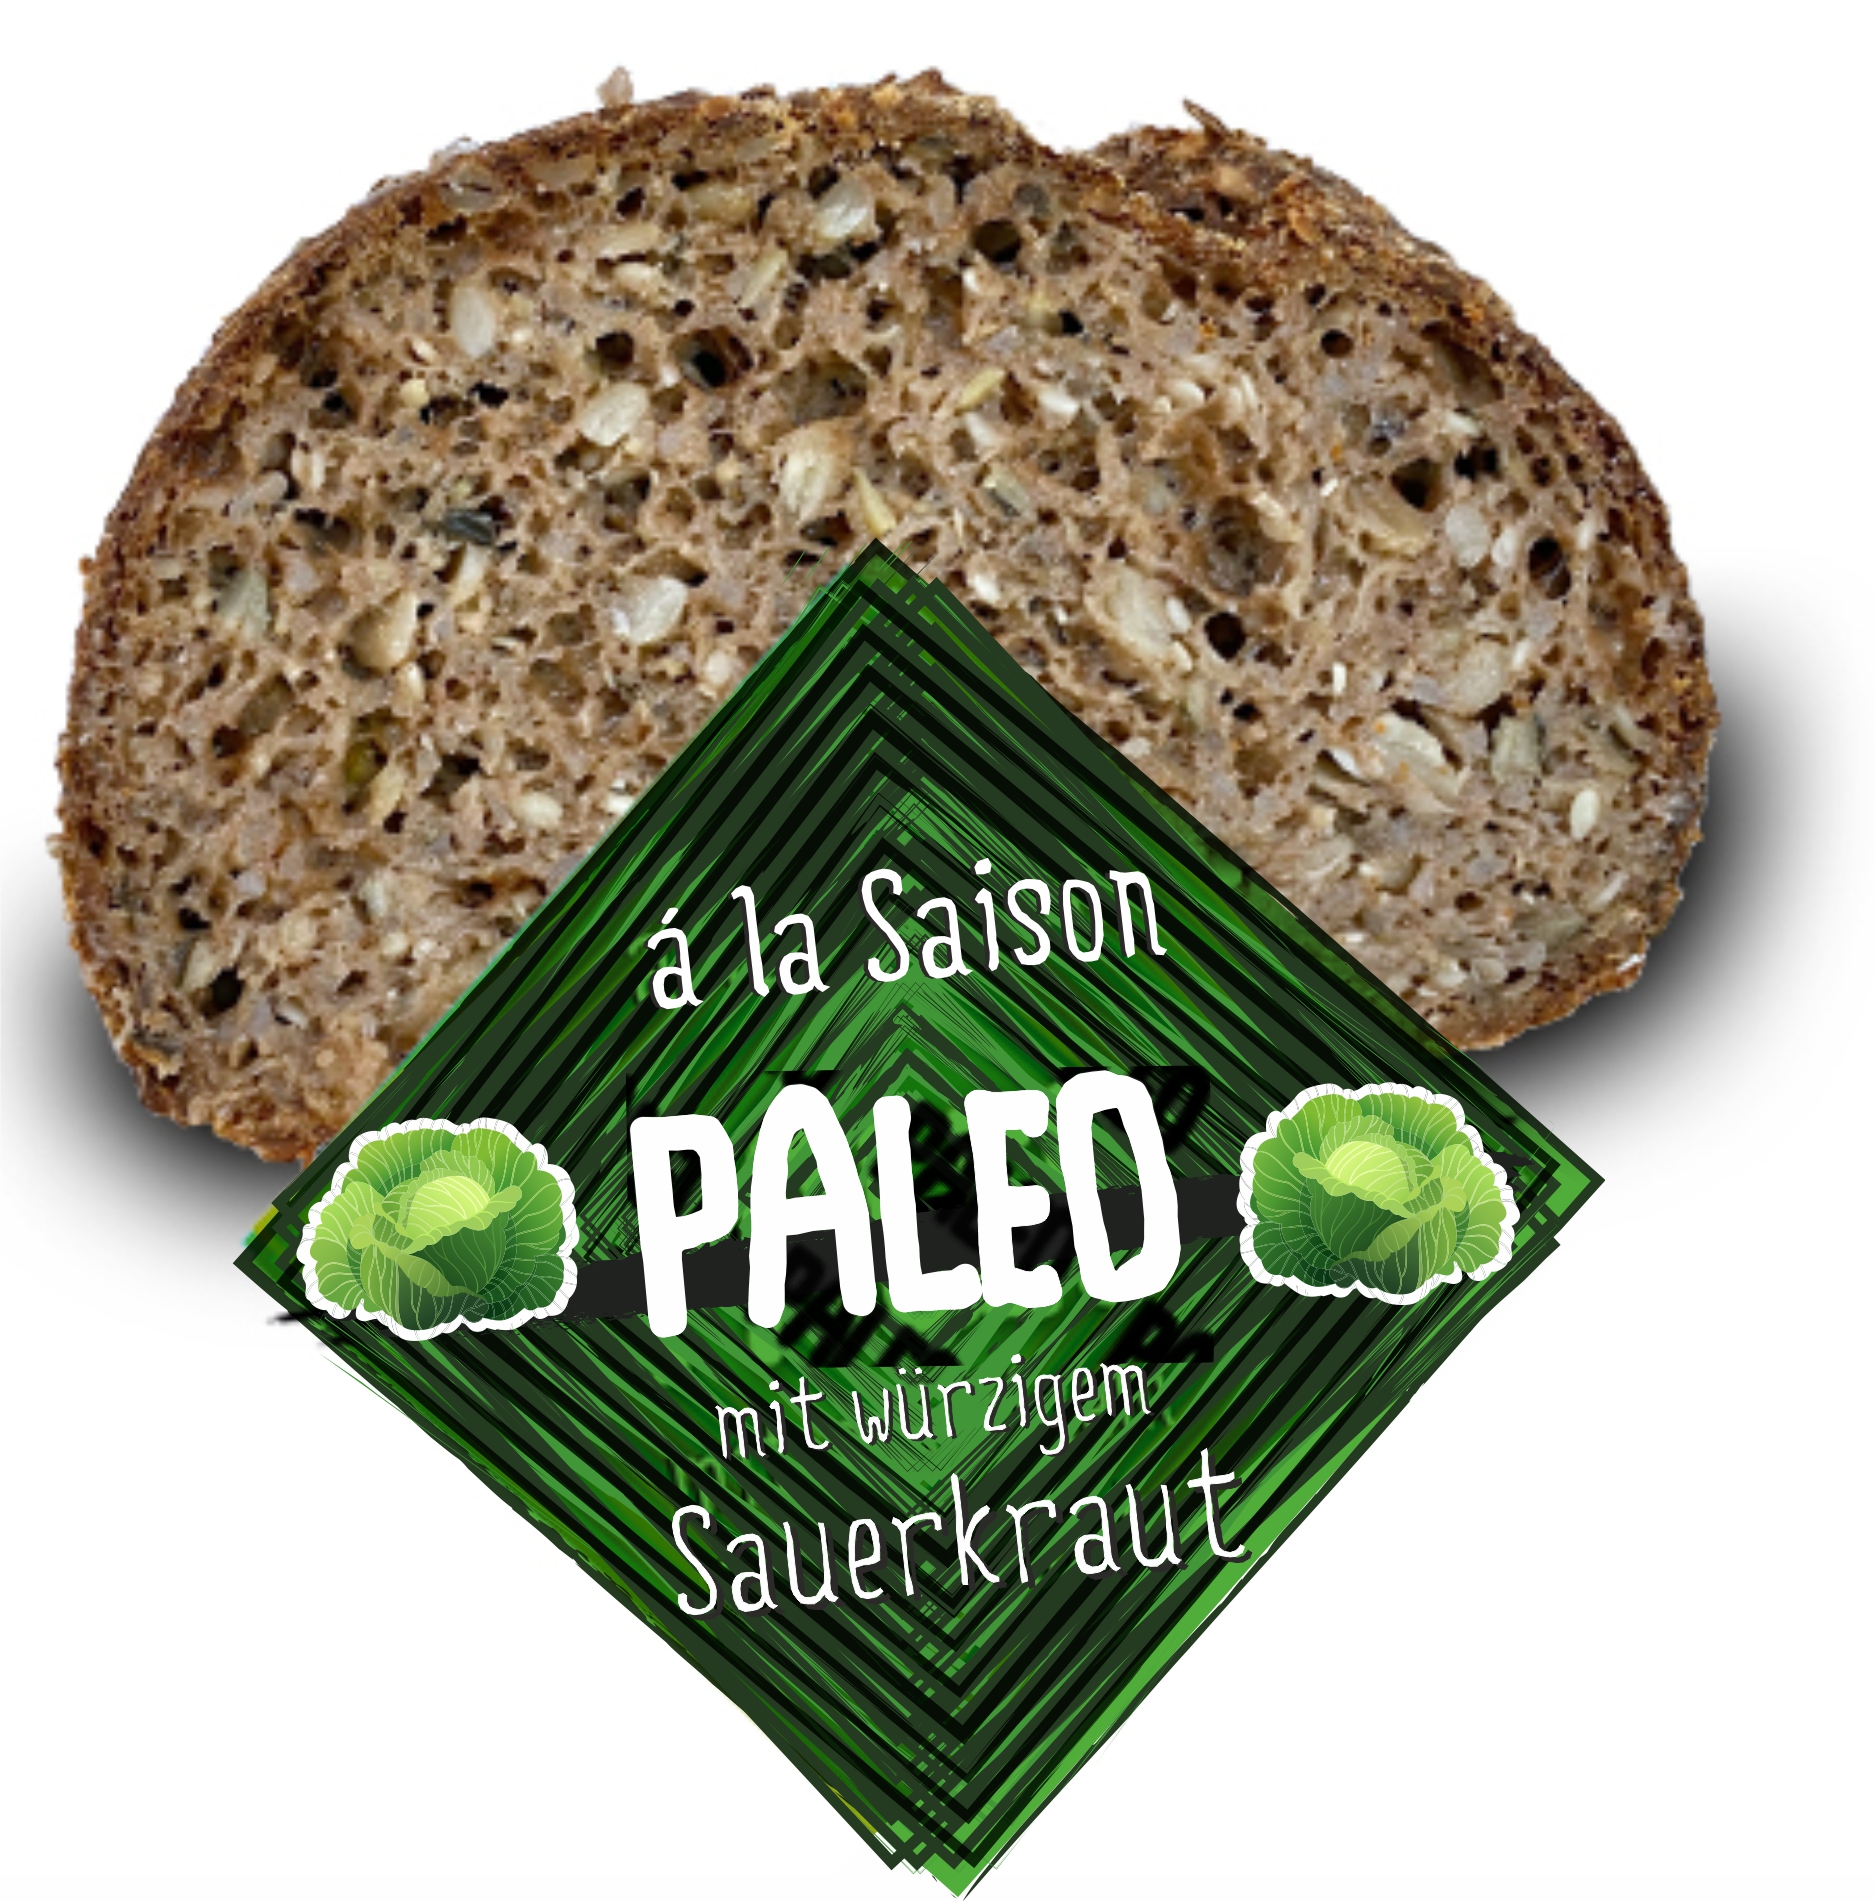 Paleo Sauerkraut